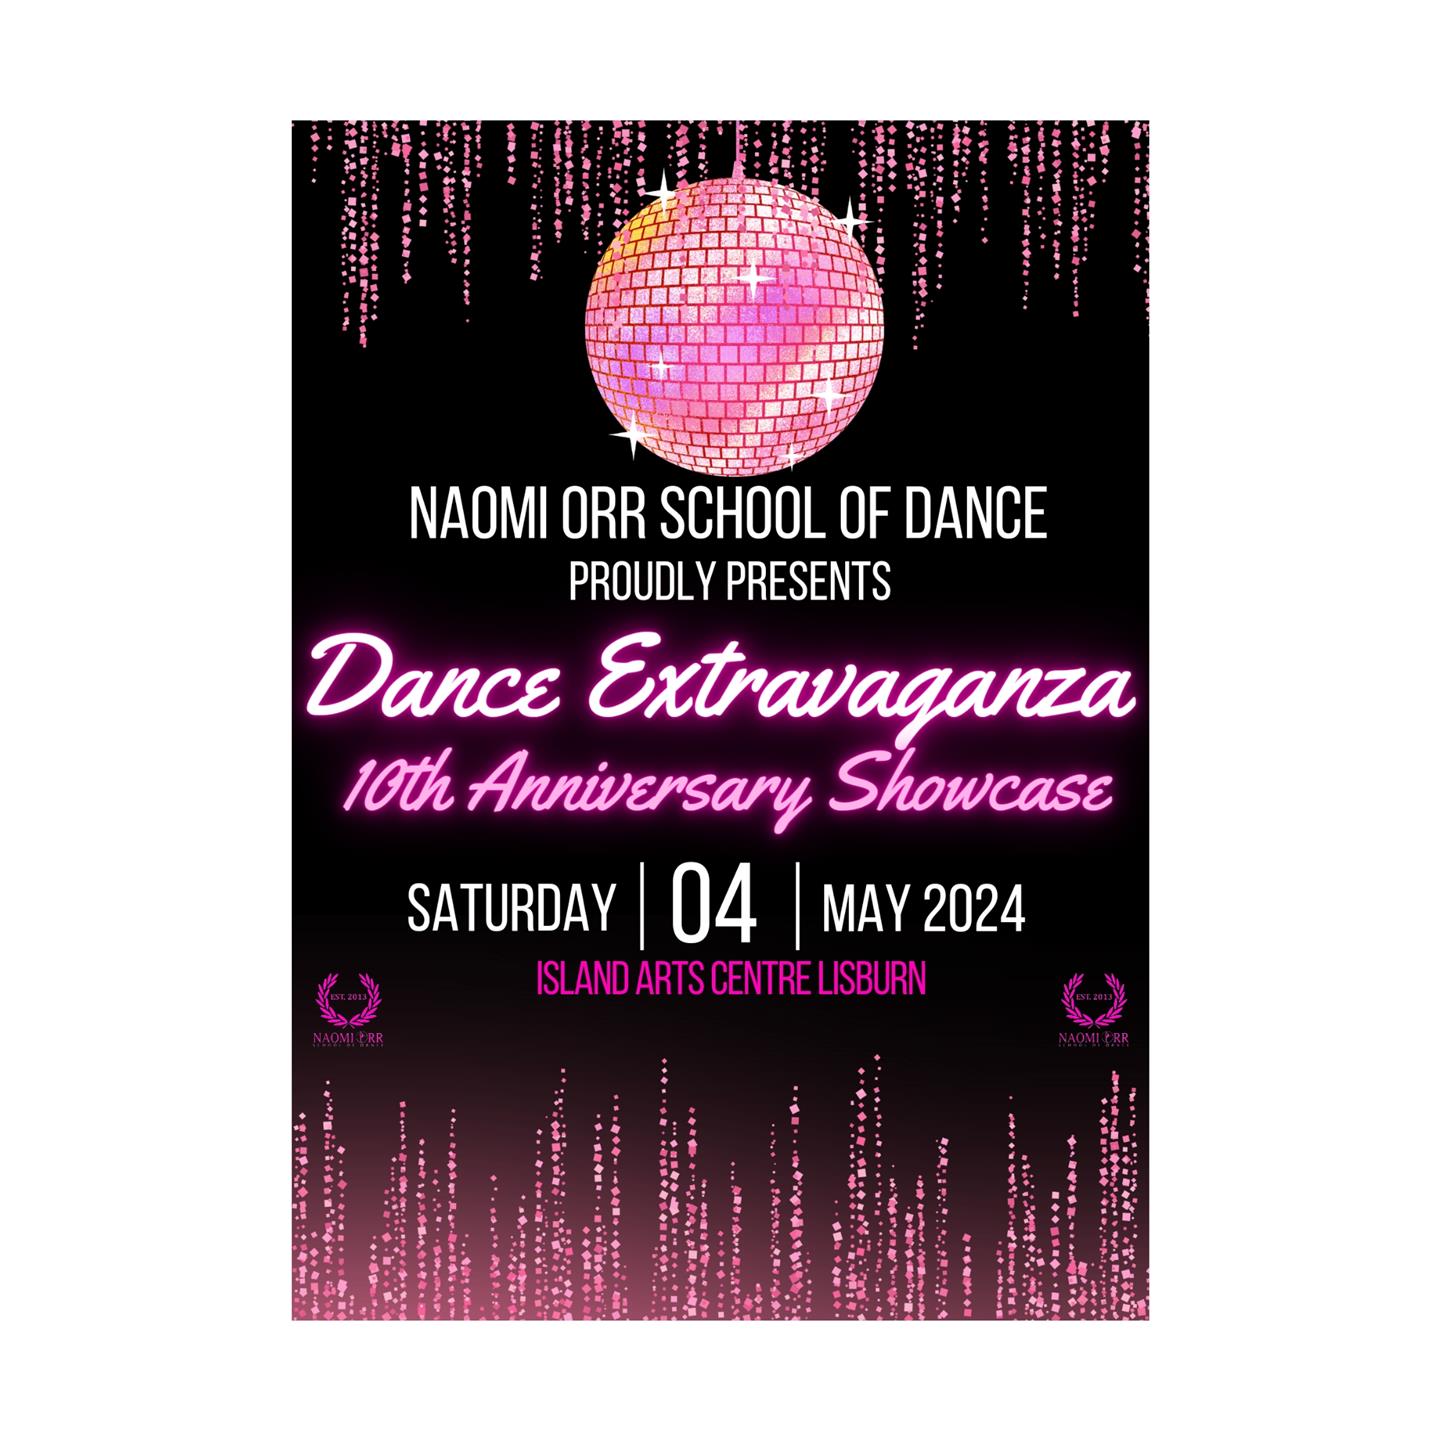 Naomi Orr School of Dance Proudly Presents